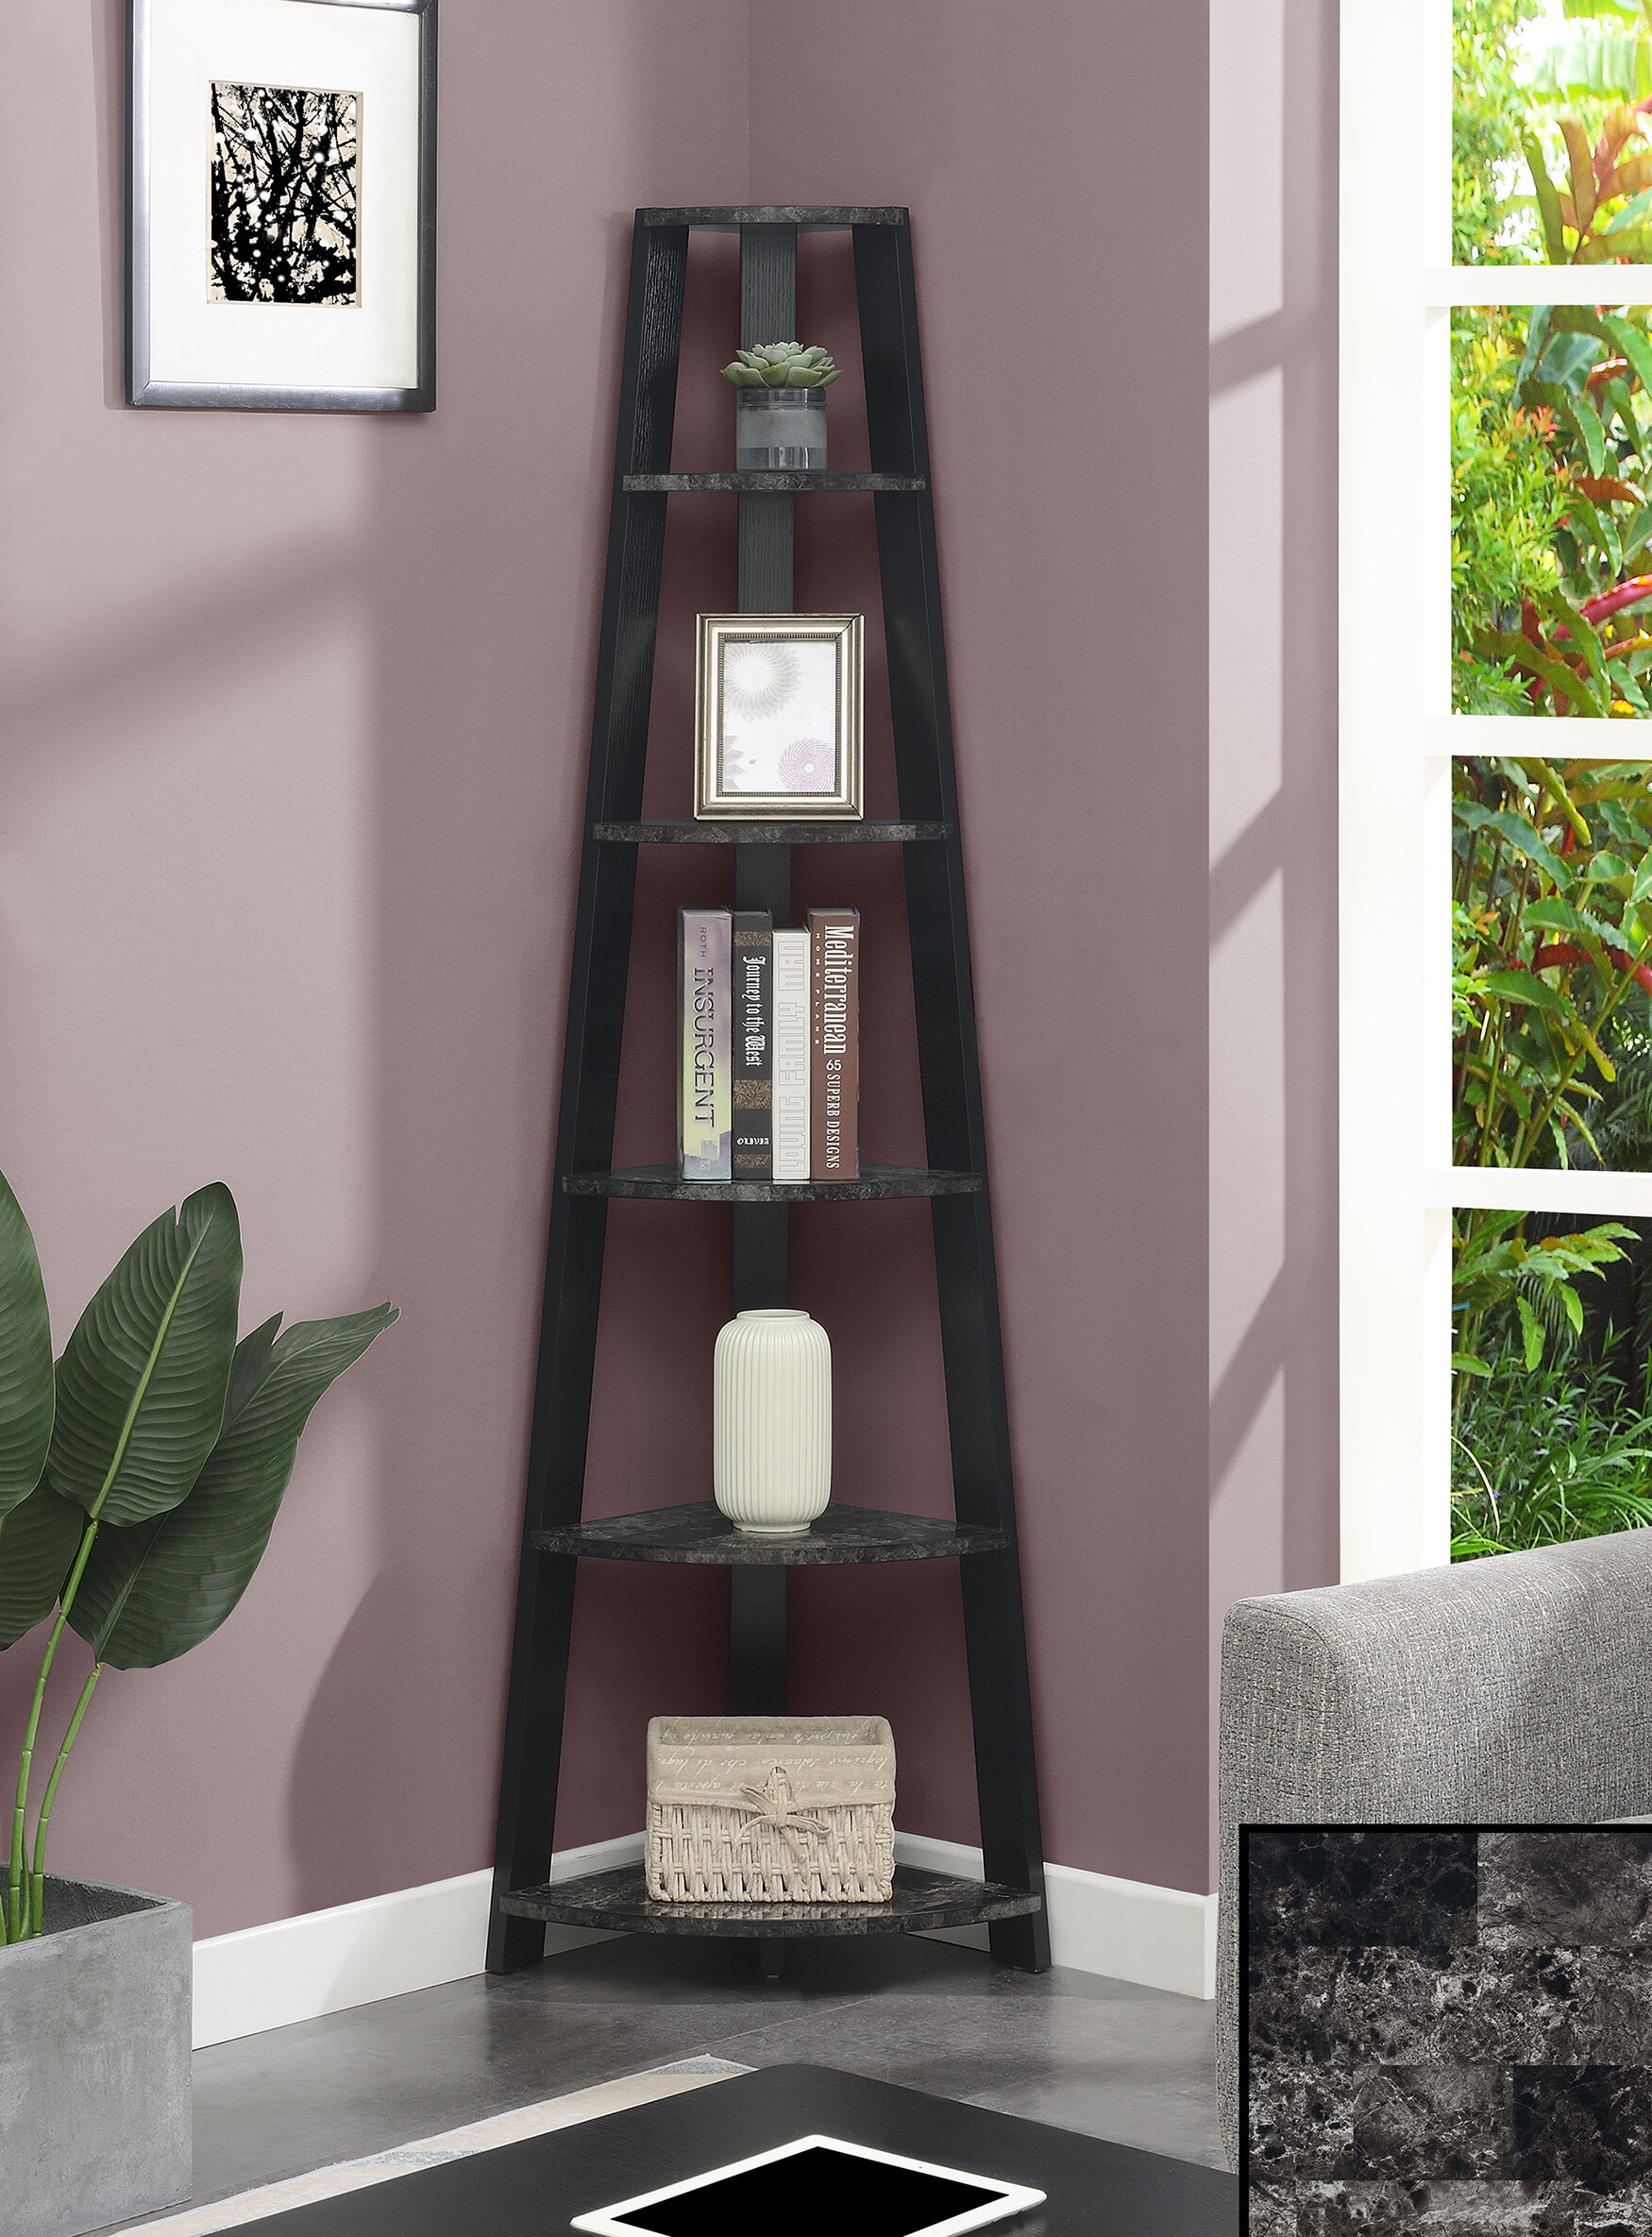 Latitude Run® Kechi Corner Shelf Corner Bookcase with 5 Tier Storage Shelves  for Bedroom, Living Room & Reviews